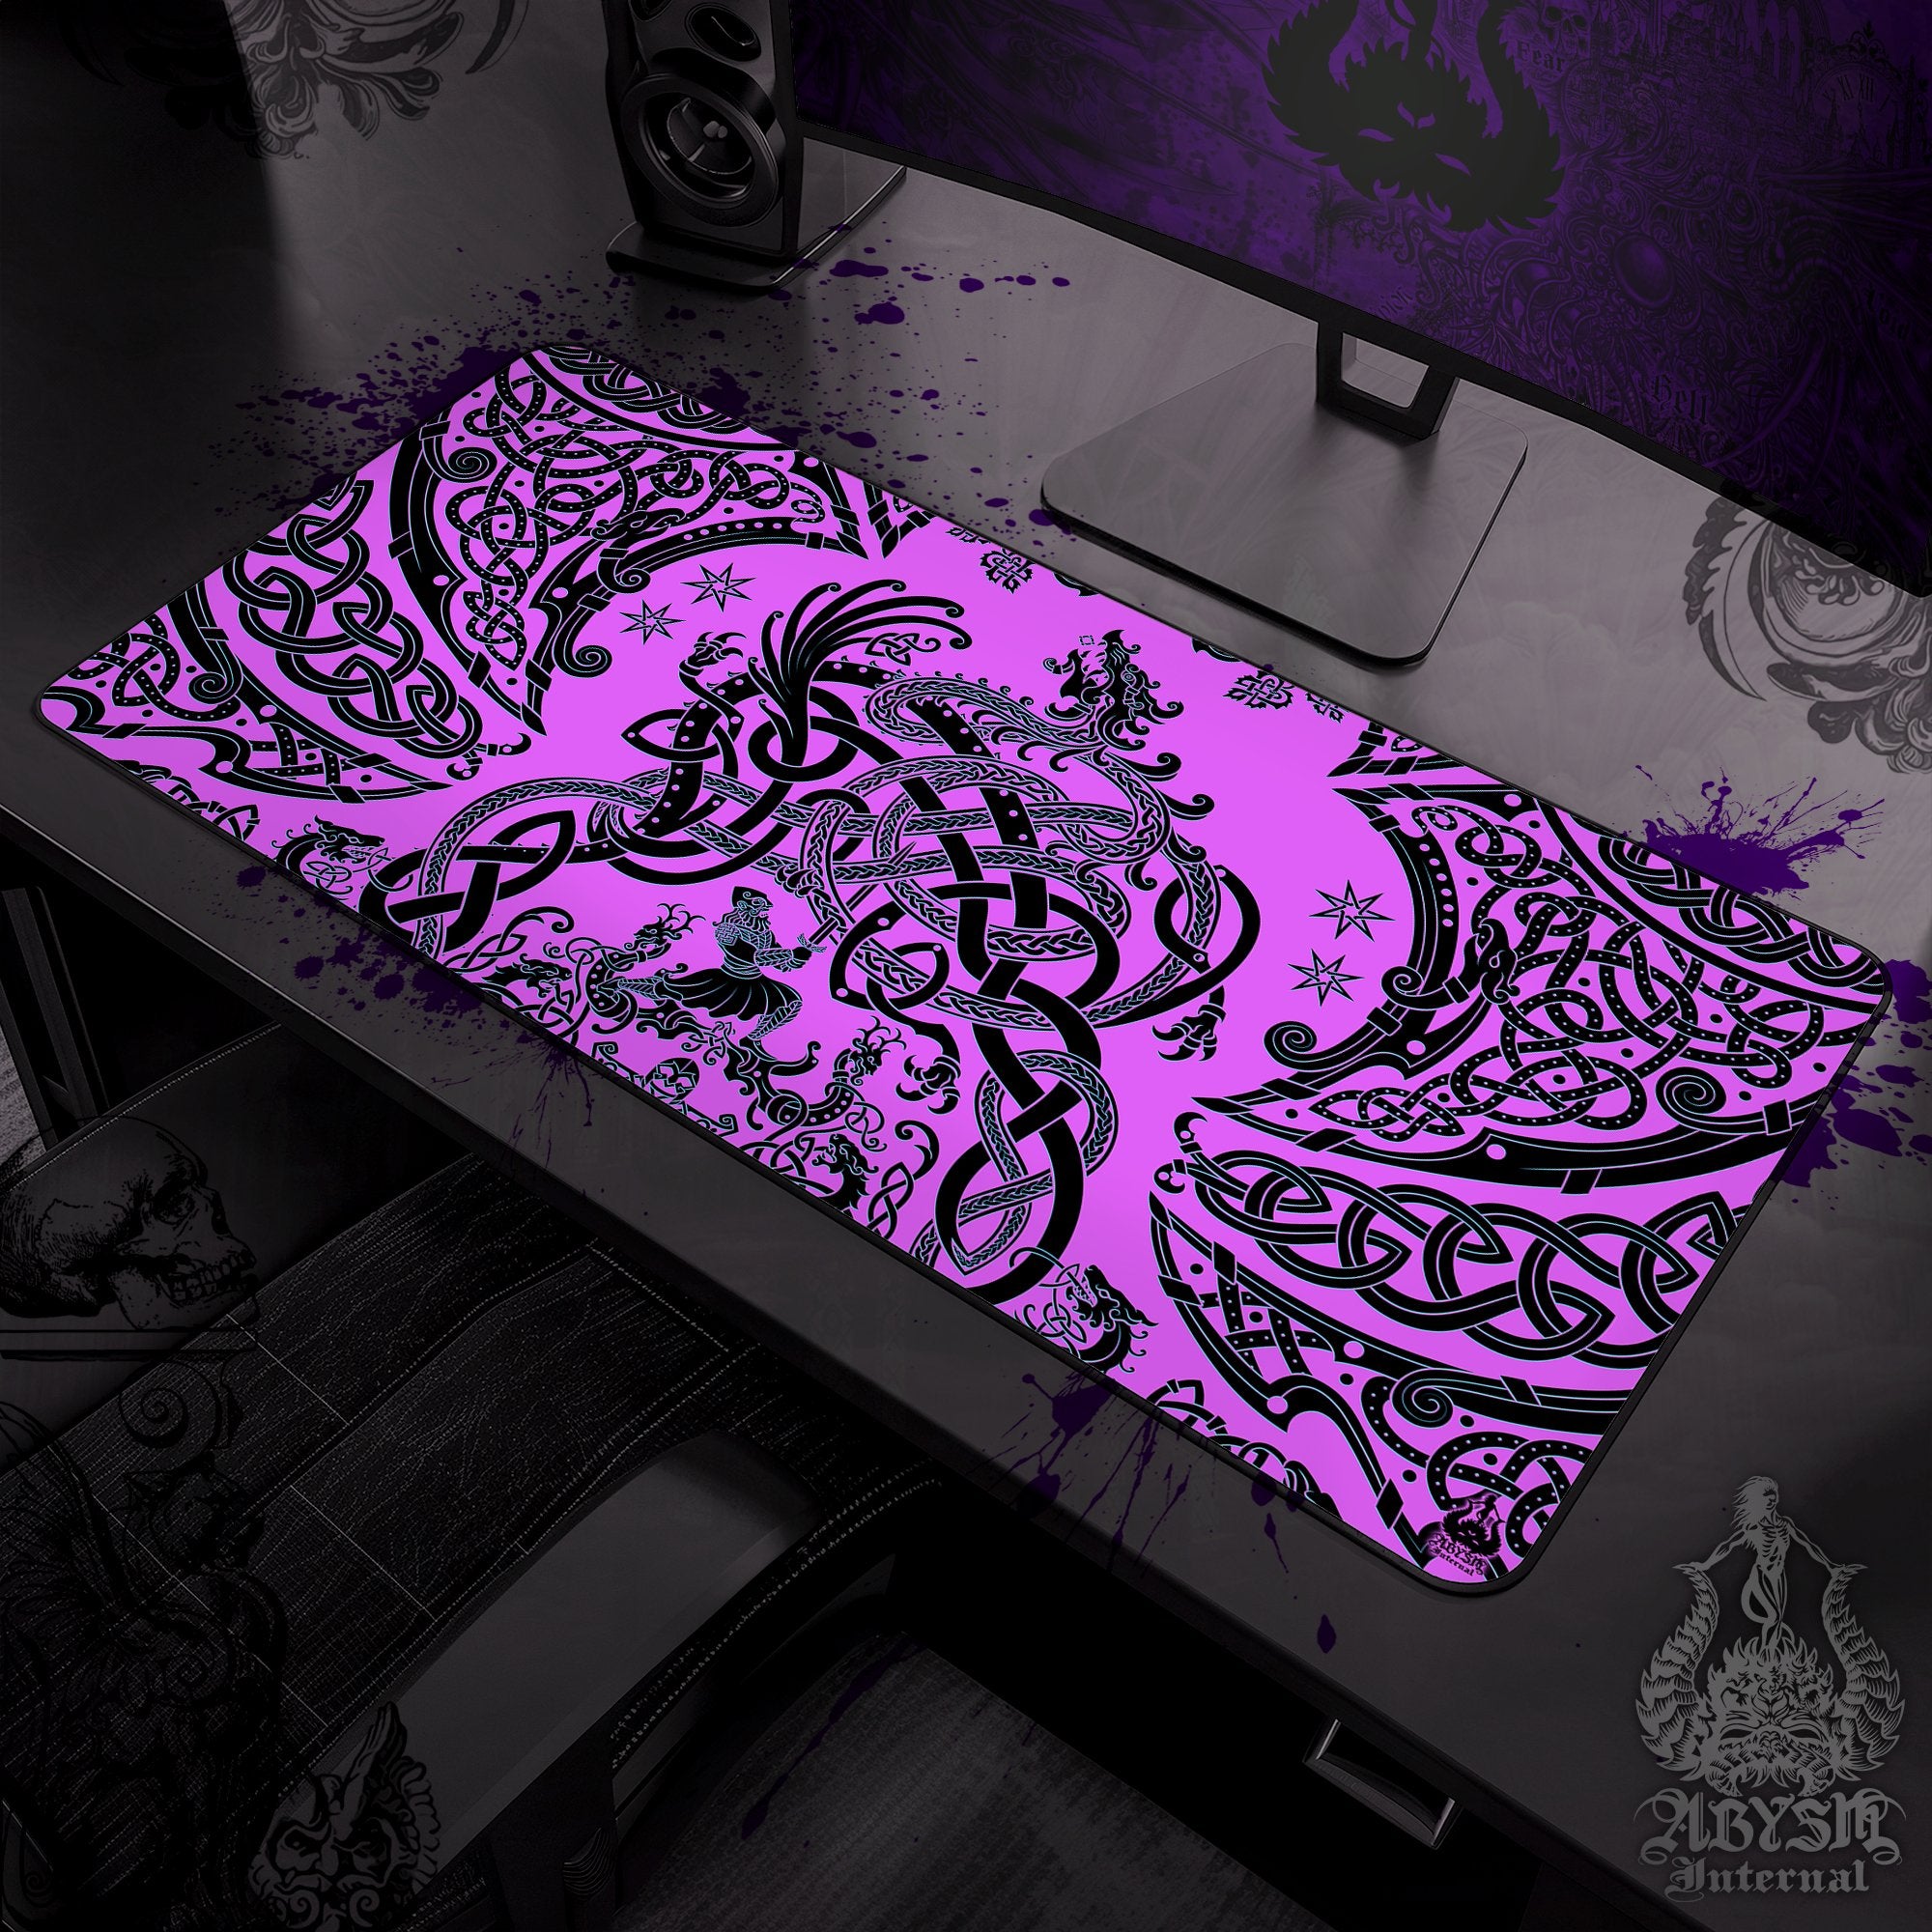 Viking Workpad, Norse Dragon Desk Mat, Nordic Knotwork Gaming Mouse Pad, Fafnir Table Protector Cover, Art Print - Pastel Goth - Abysm Internal